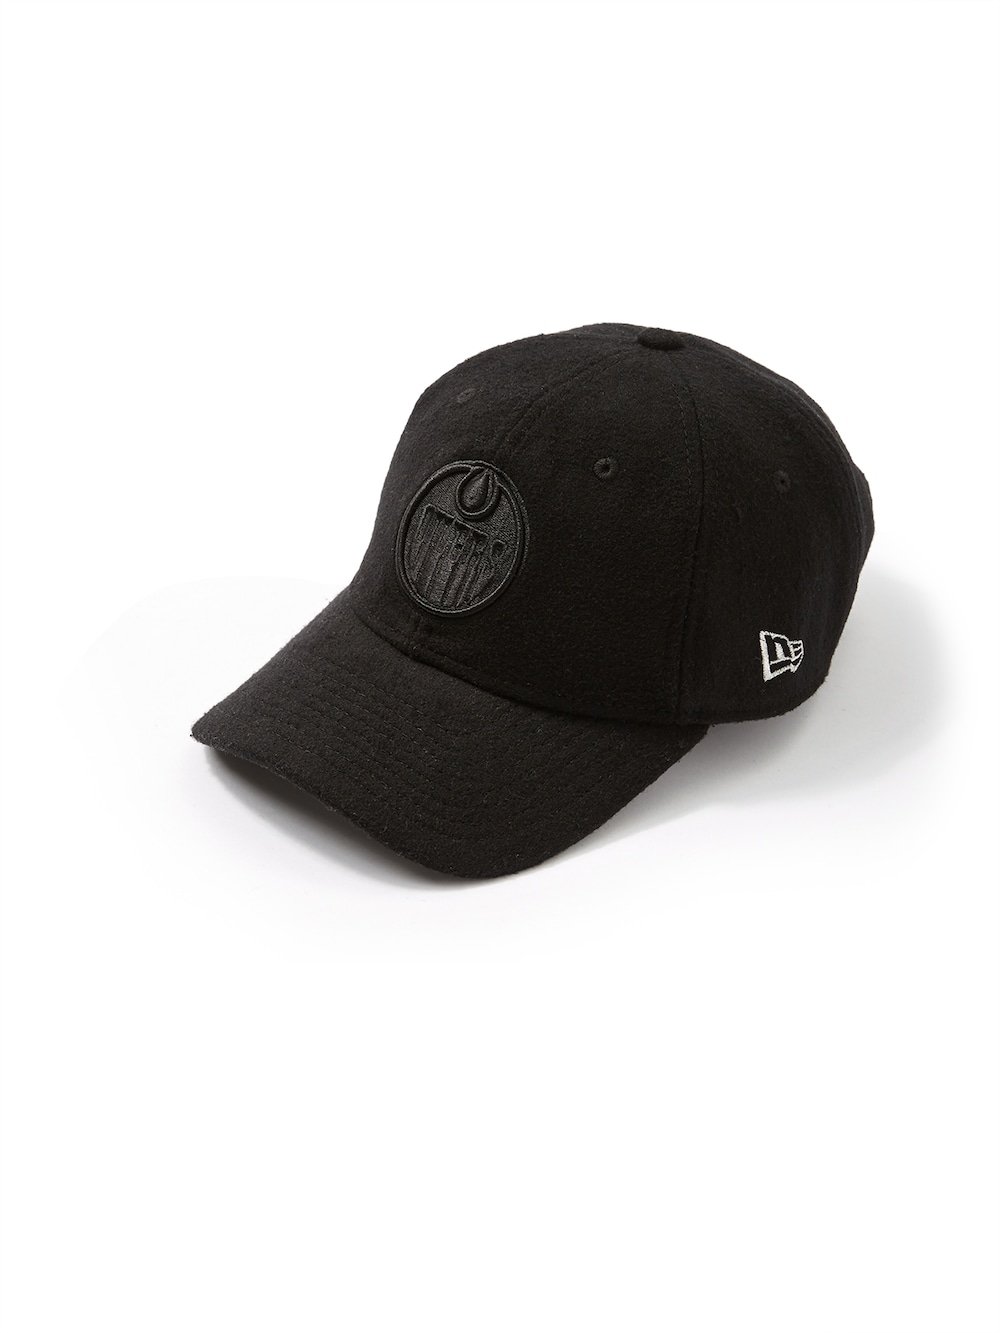 black edmonton oilers hat